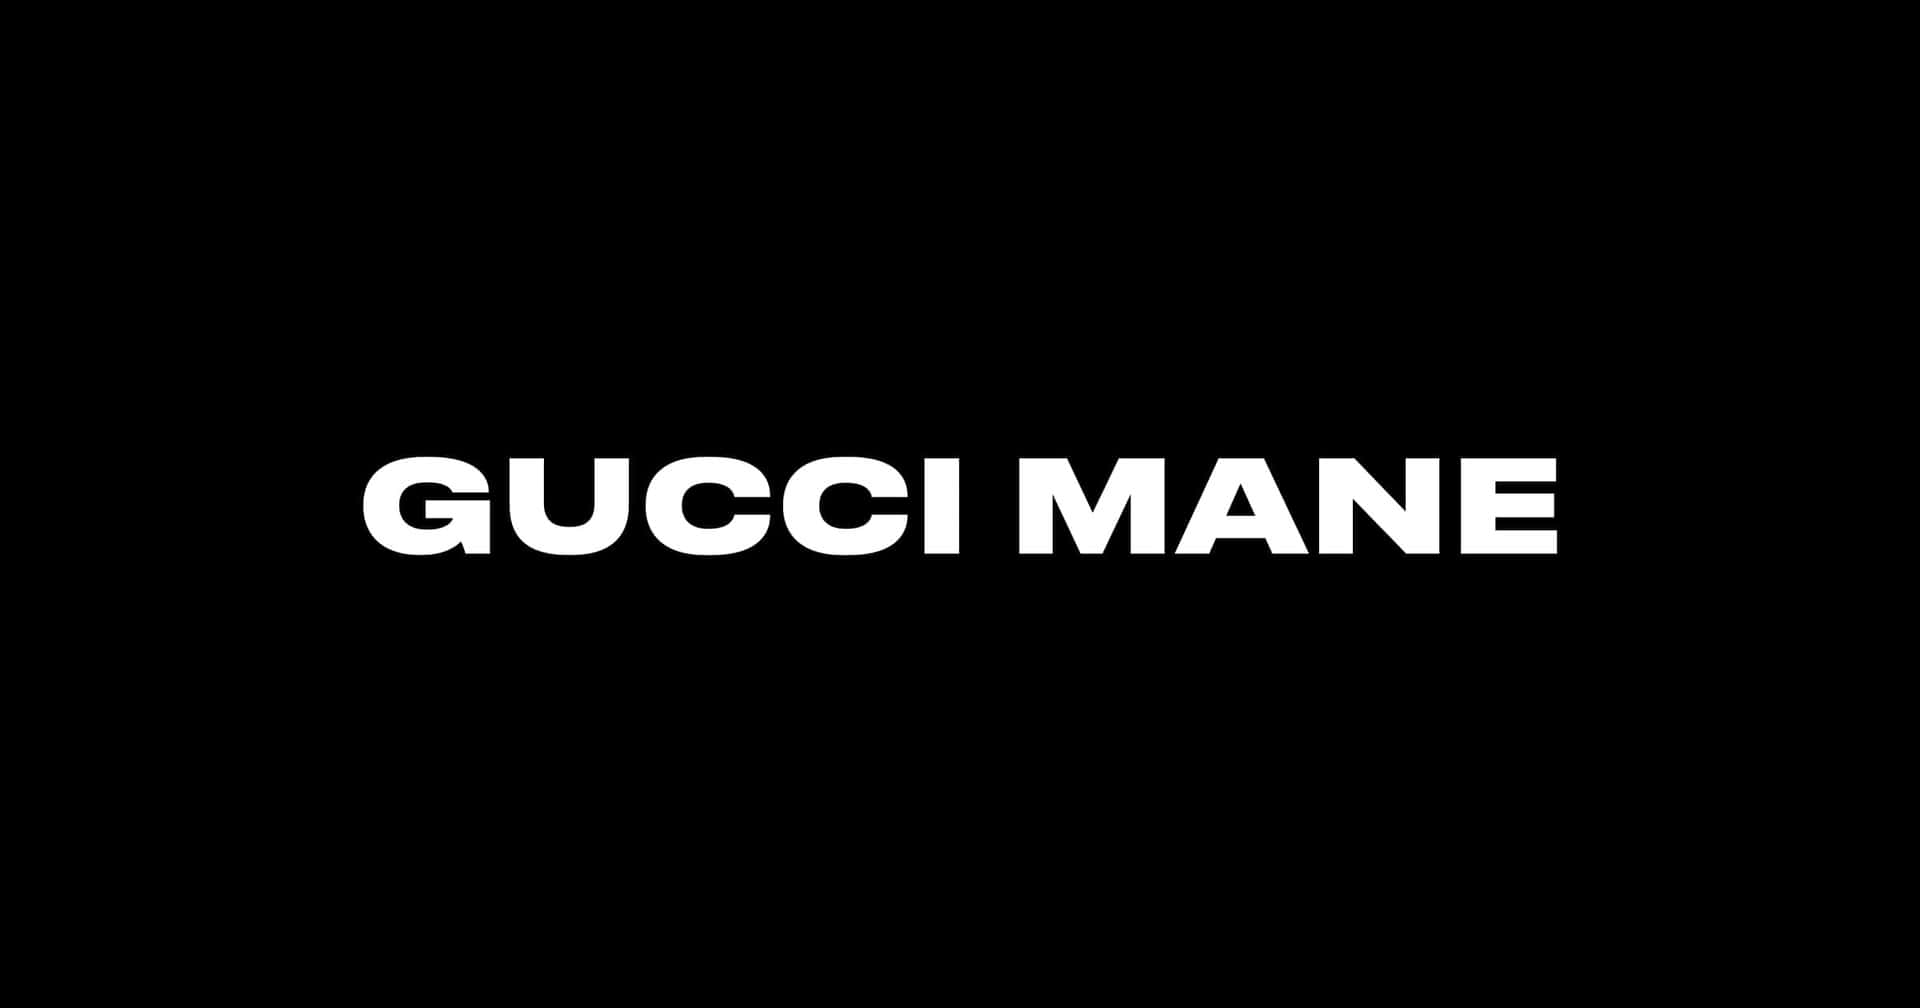 Gucci Mane Text Logo Background